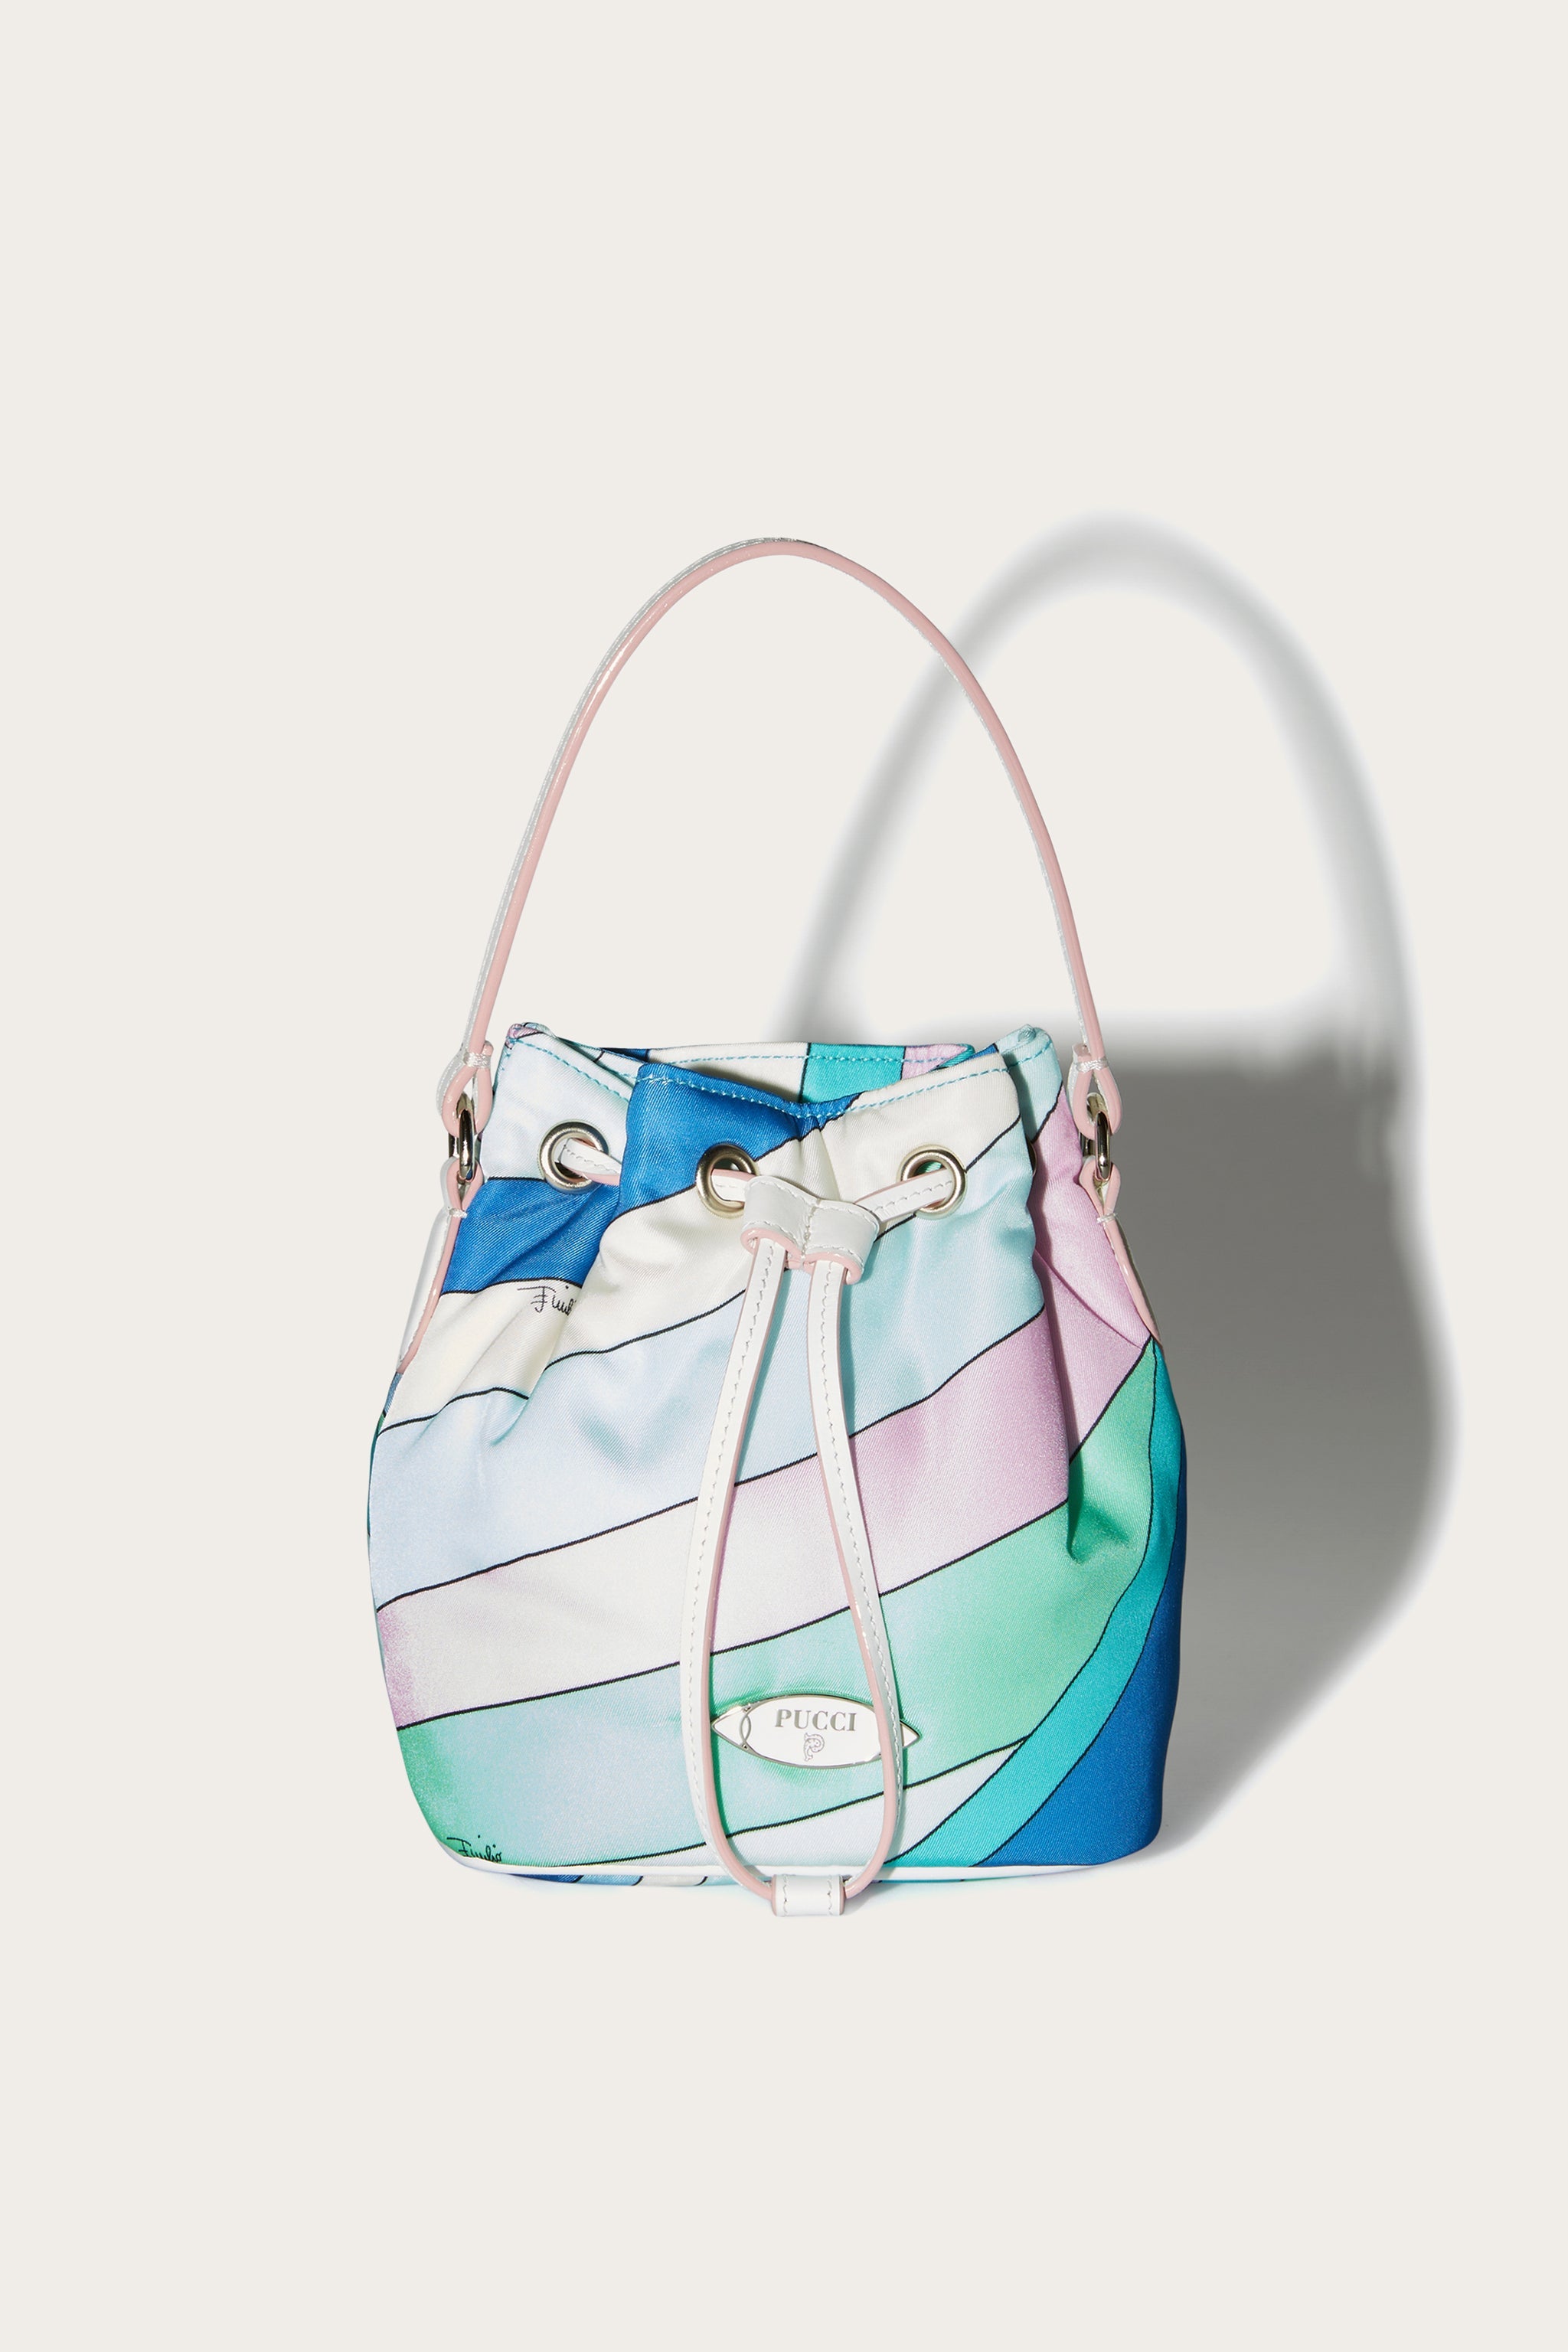 Pucci bag: italian brand bag and more | Pucci